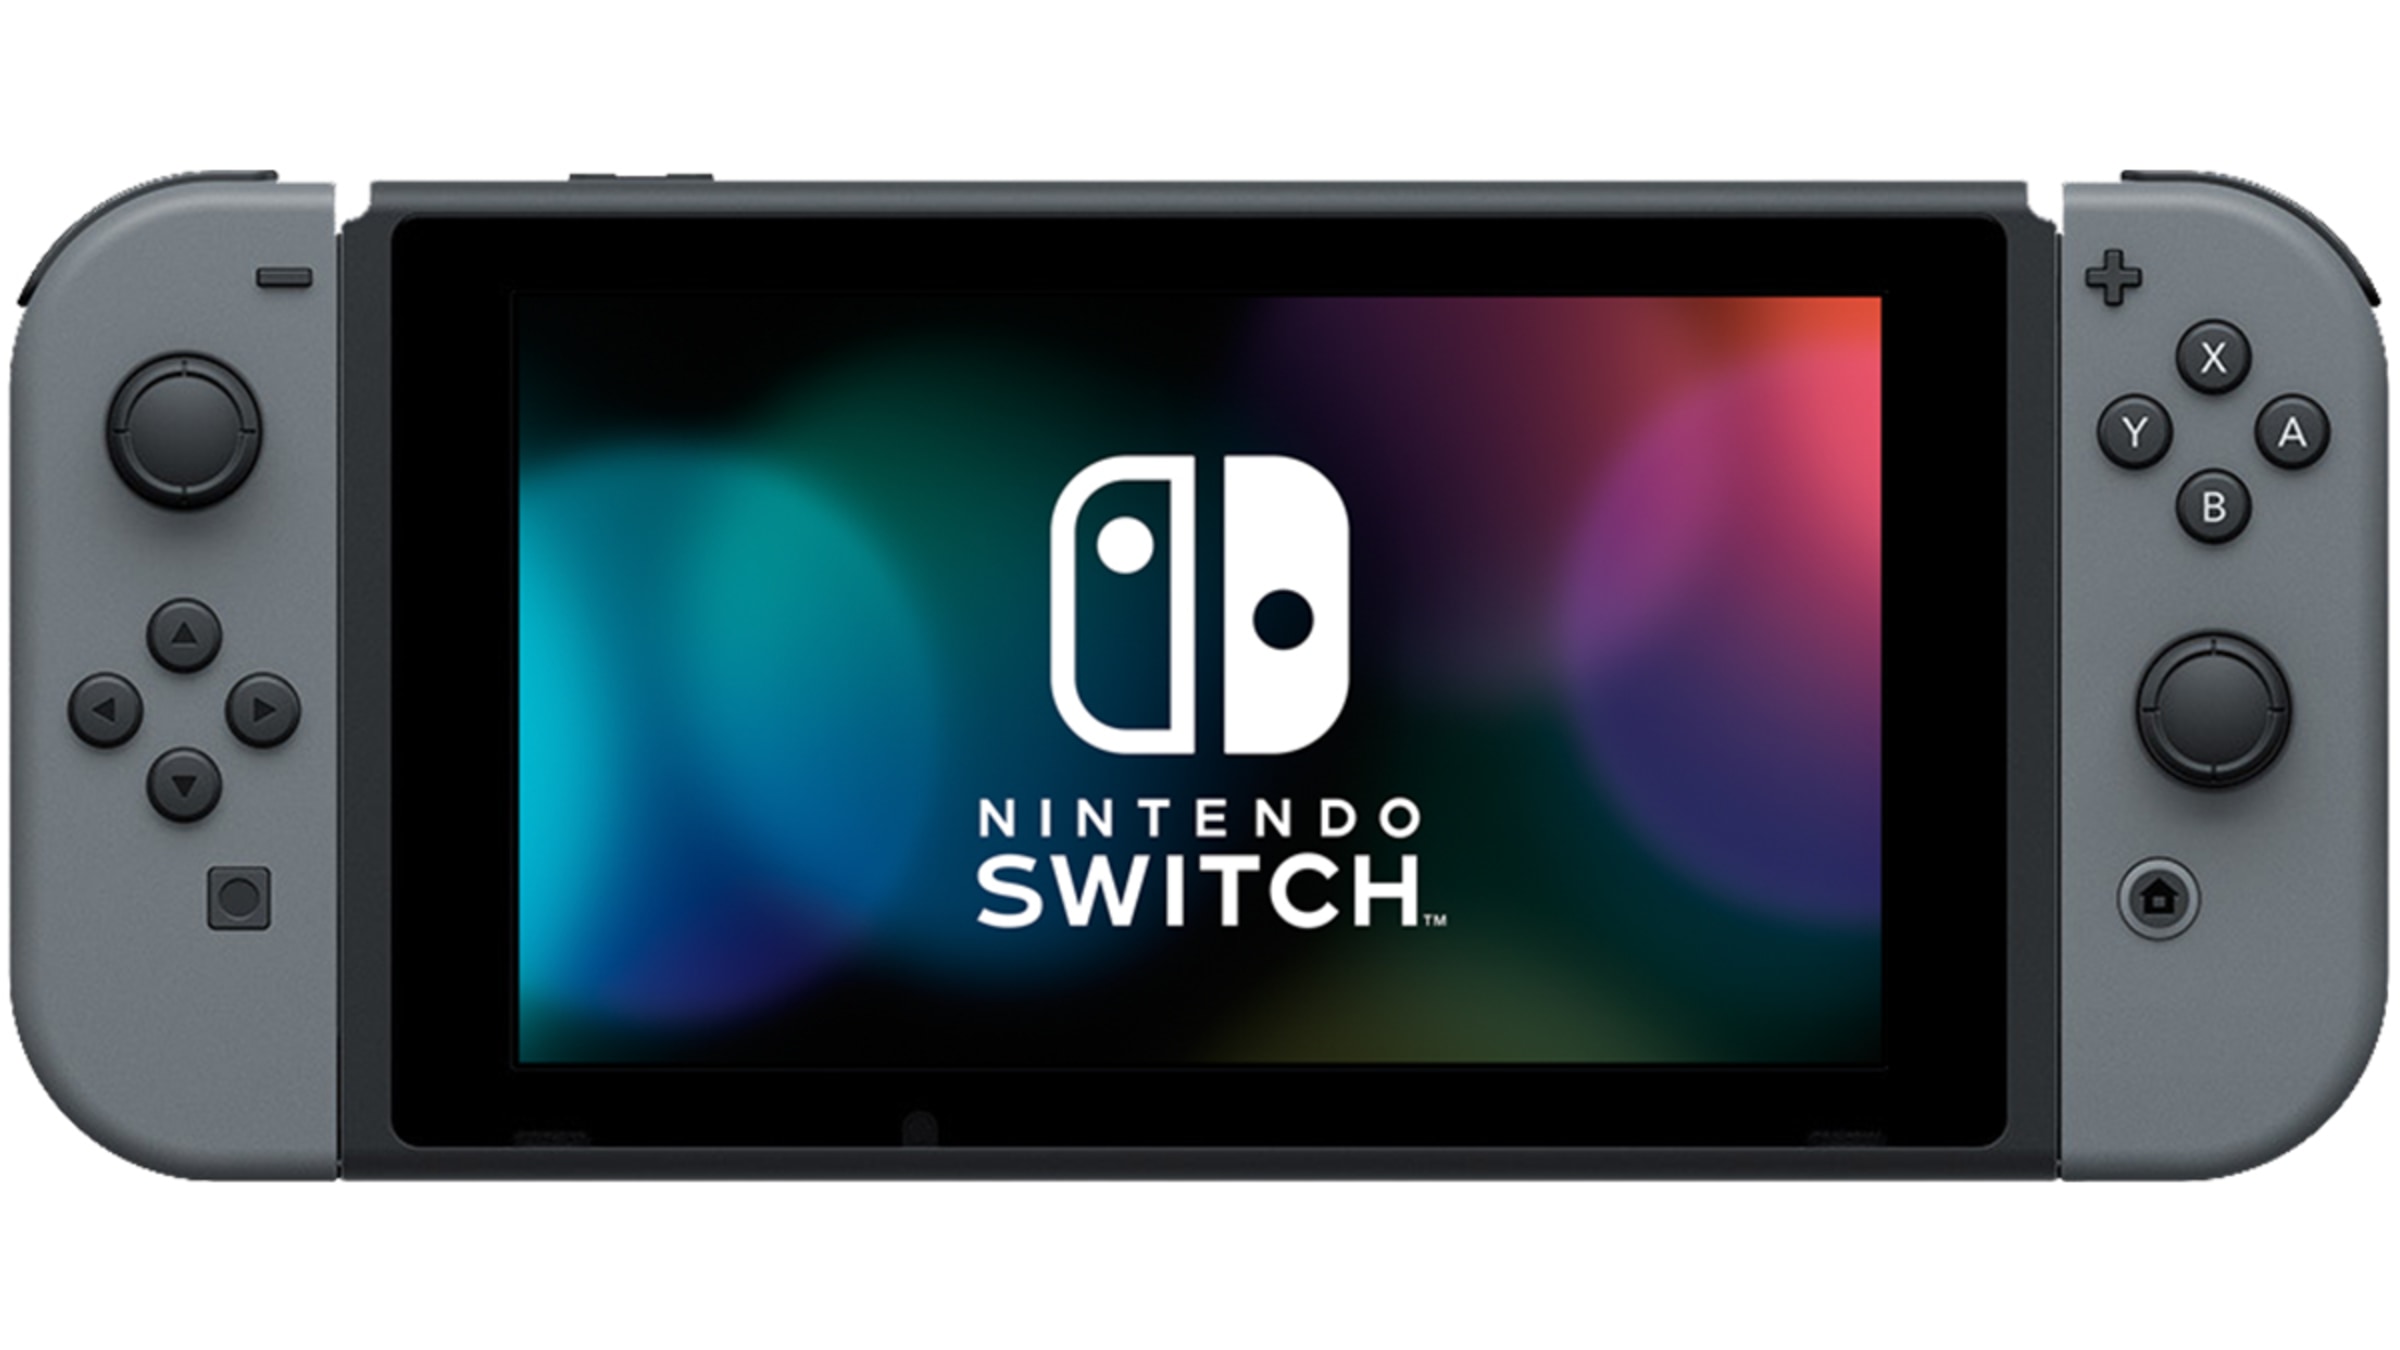 Nintendo Switch Gray + Gray Joy-Con - REFURBISHED - - Nintendo - Nintendo Official Site